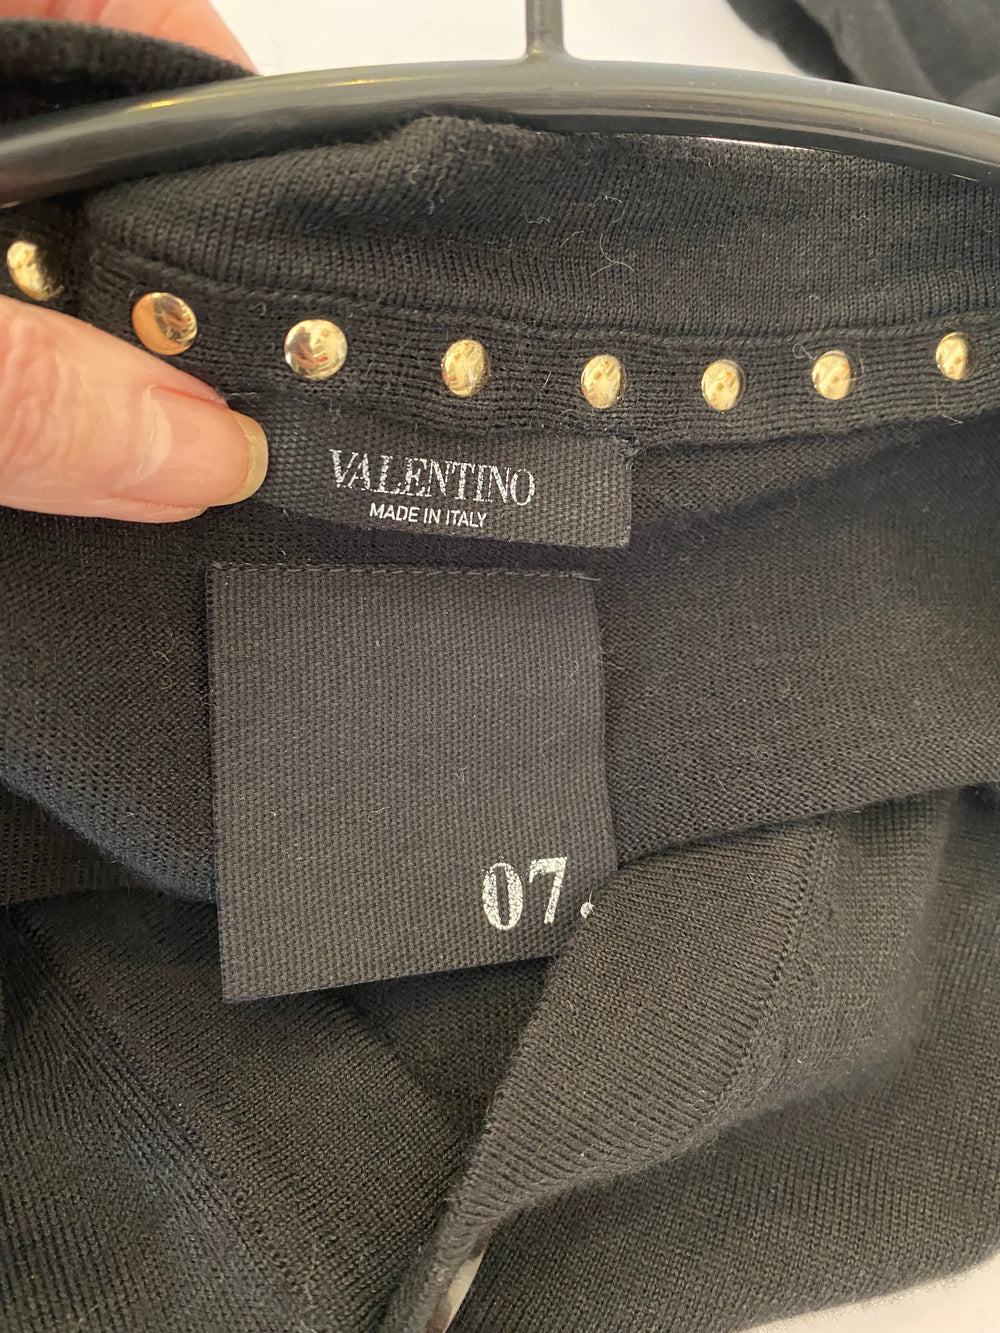 Valentino Black Rockstud Cardigan Size L (excellent)